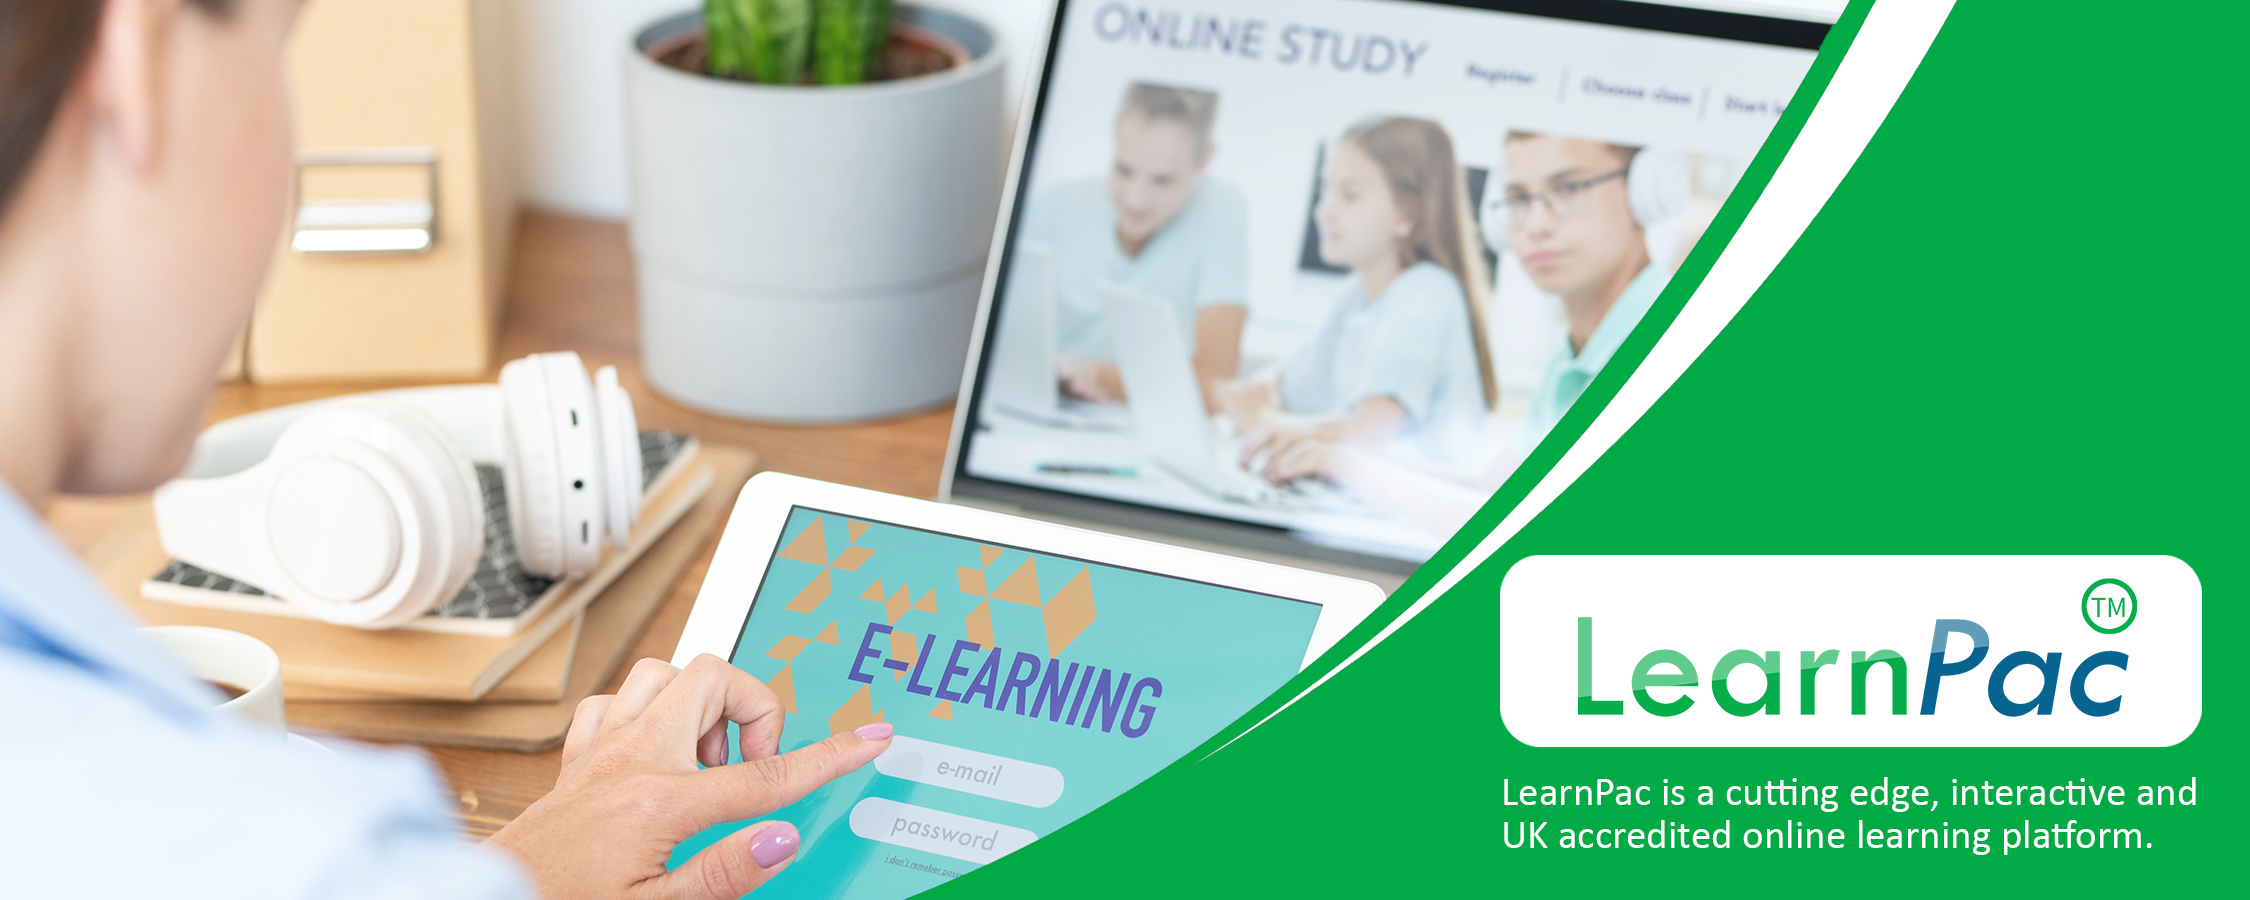 Supply Chain Management Training - Online Learning Courses - E-Learning Courses - LearnPac Systems UK -